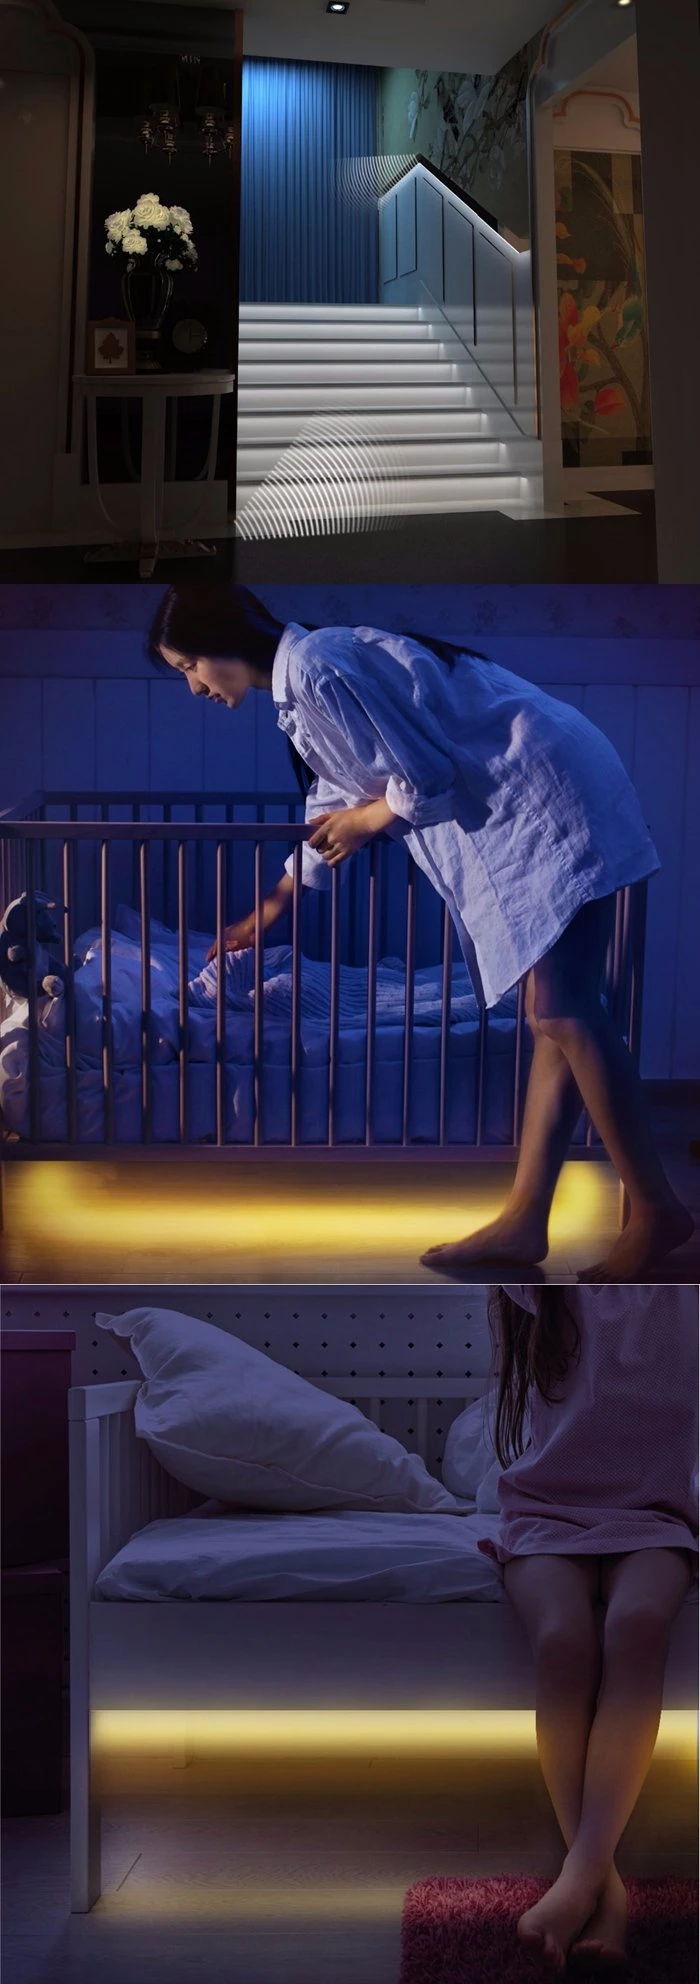 1m LED Strip Under Bed Night Light Activated Motion Sensor Baby Kids Bedroom